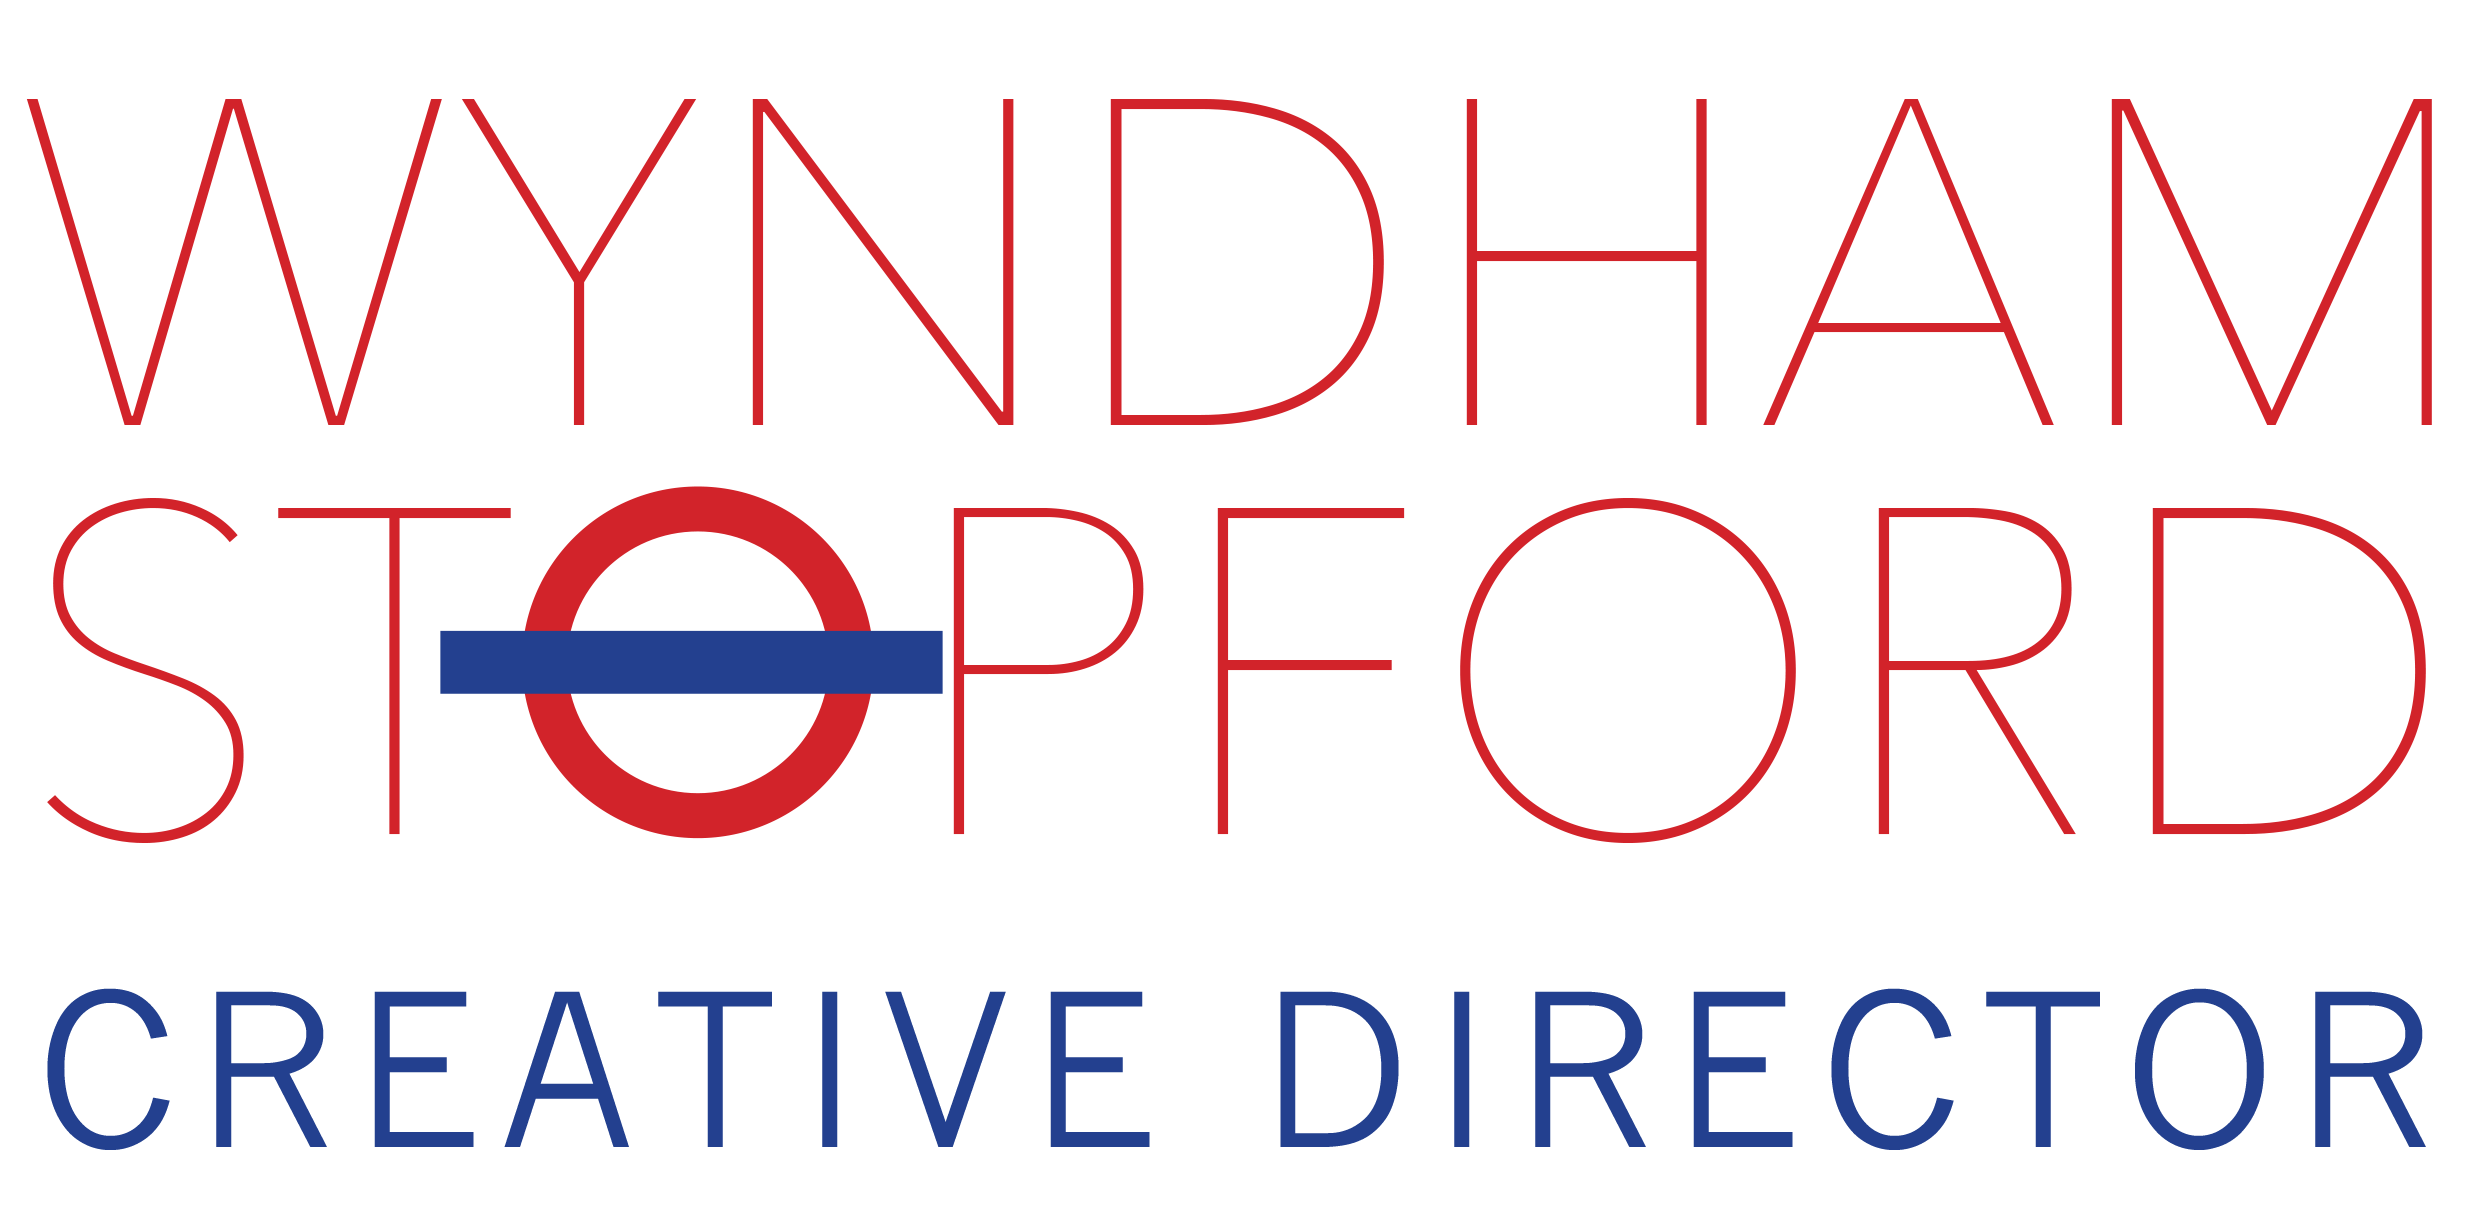 Wyndham Stopford